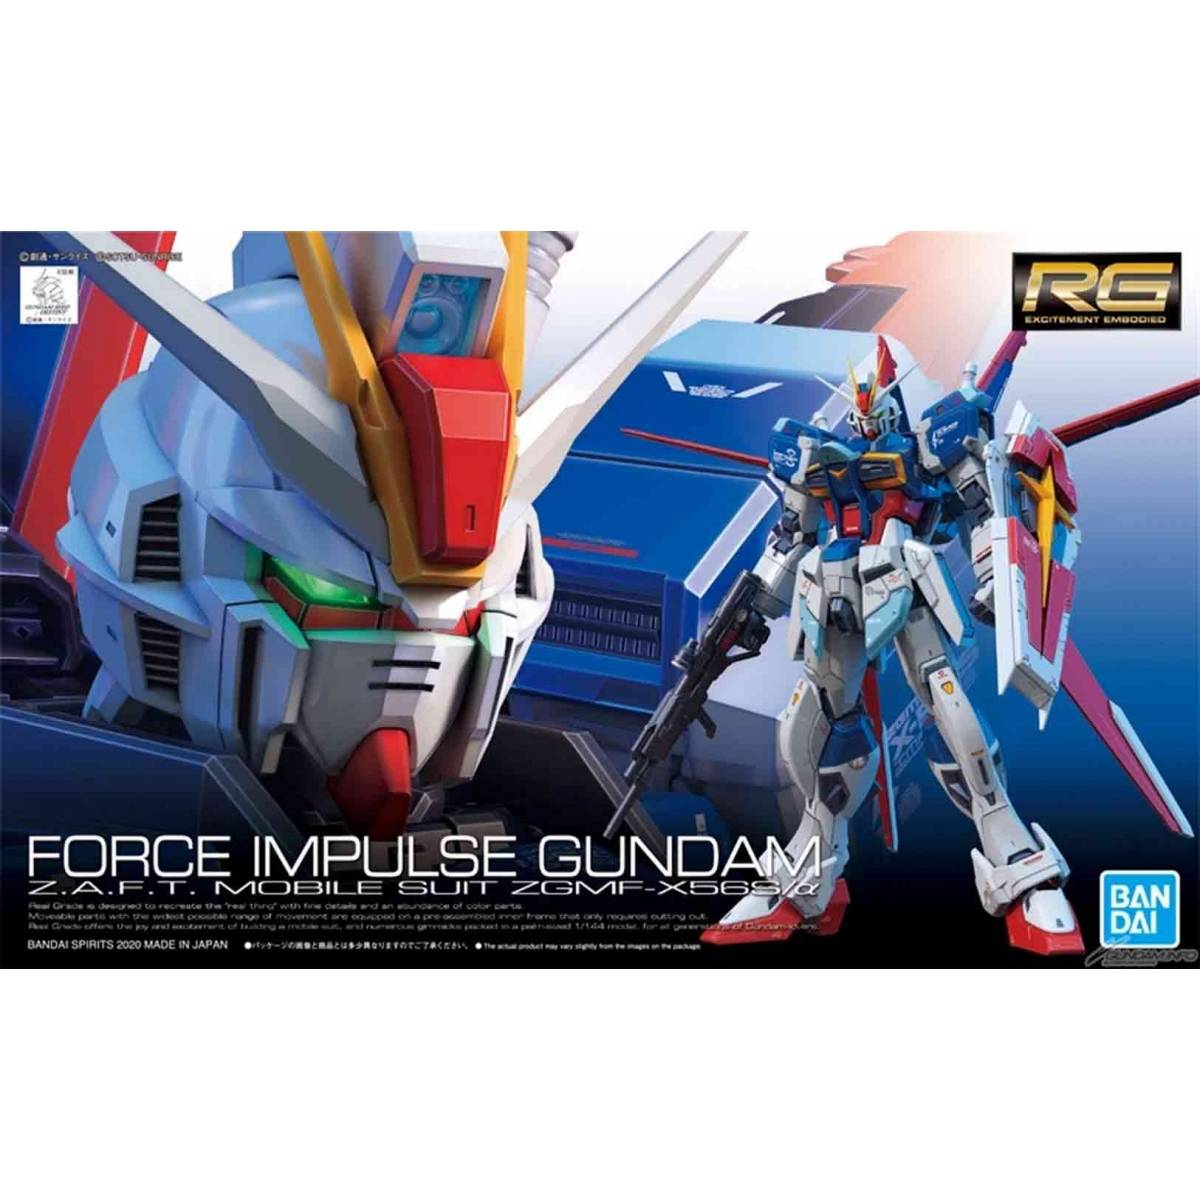 RG Force Impulse Gundam 1/144